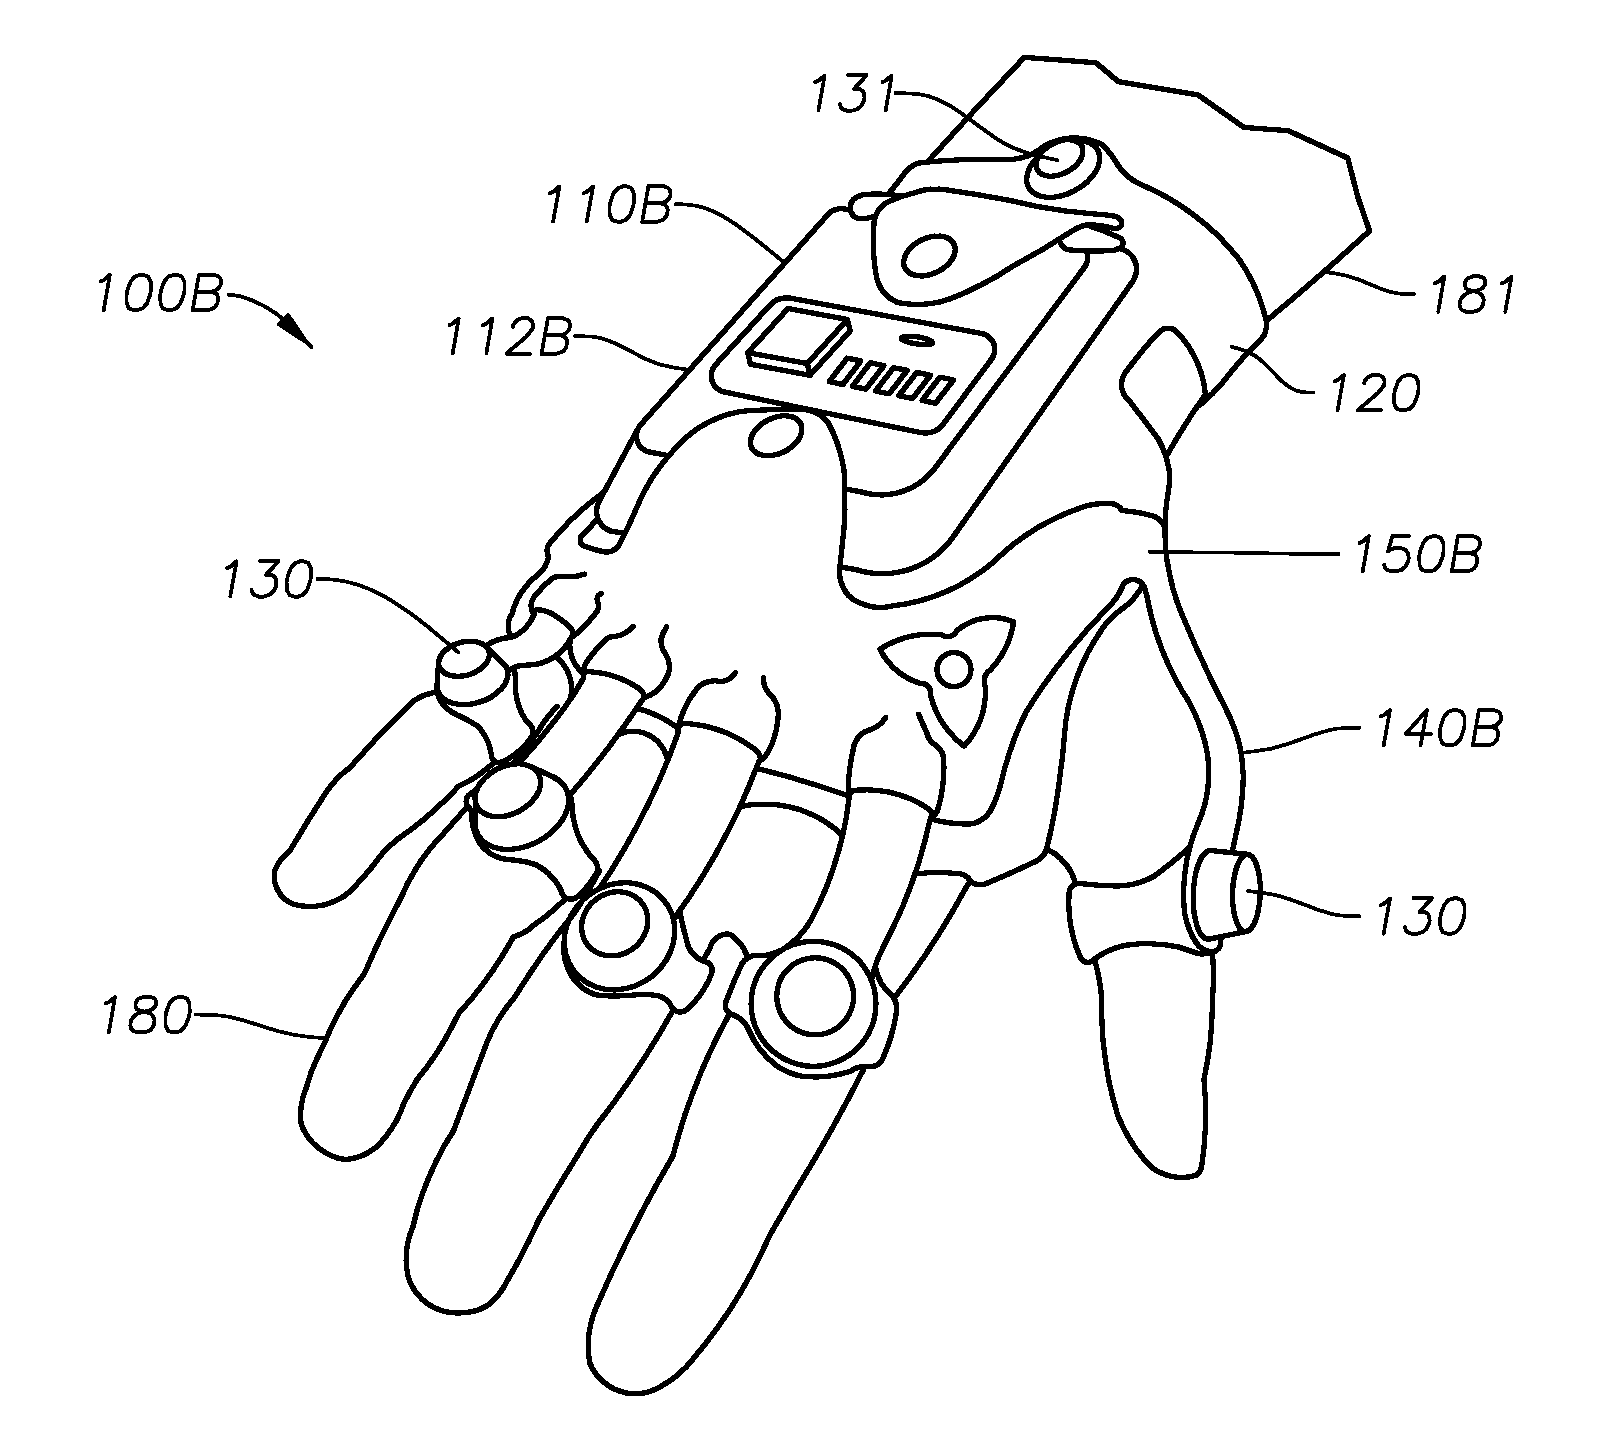 Portable Hand Rehabilitation Device